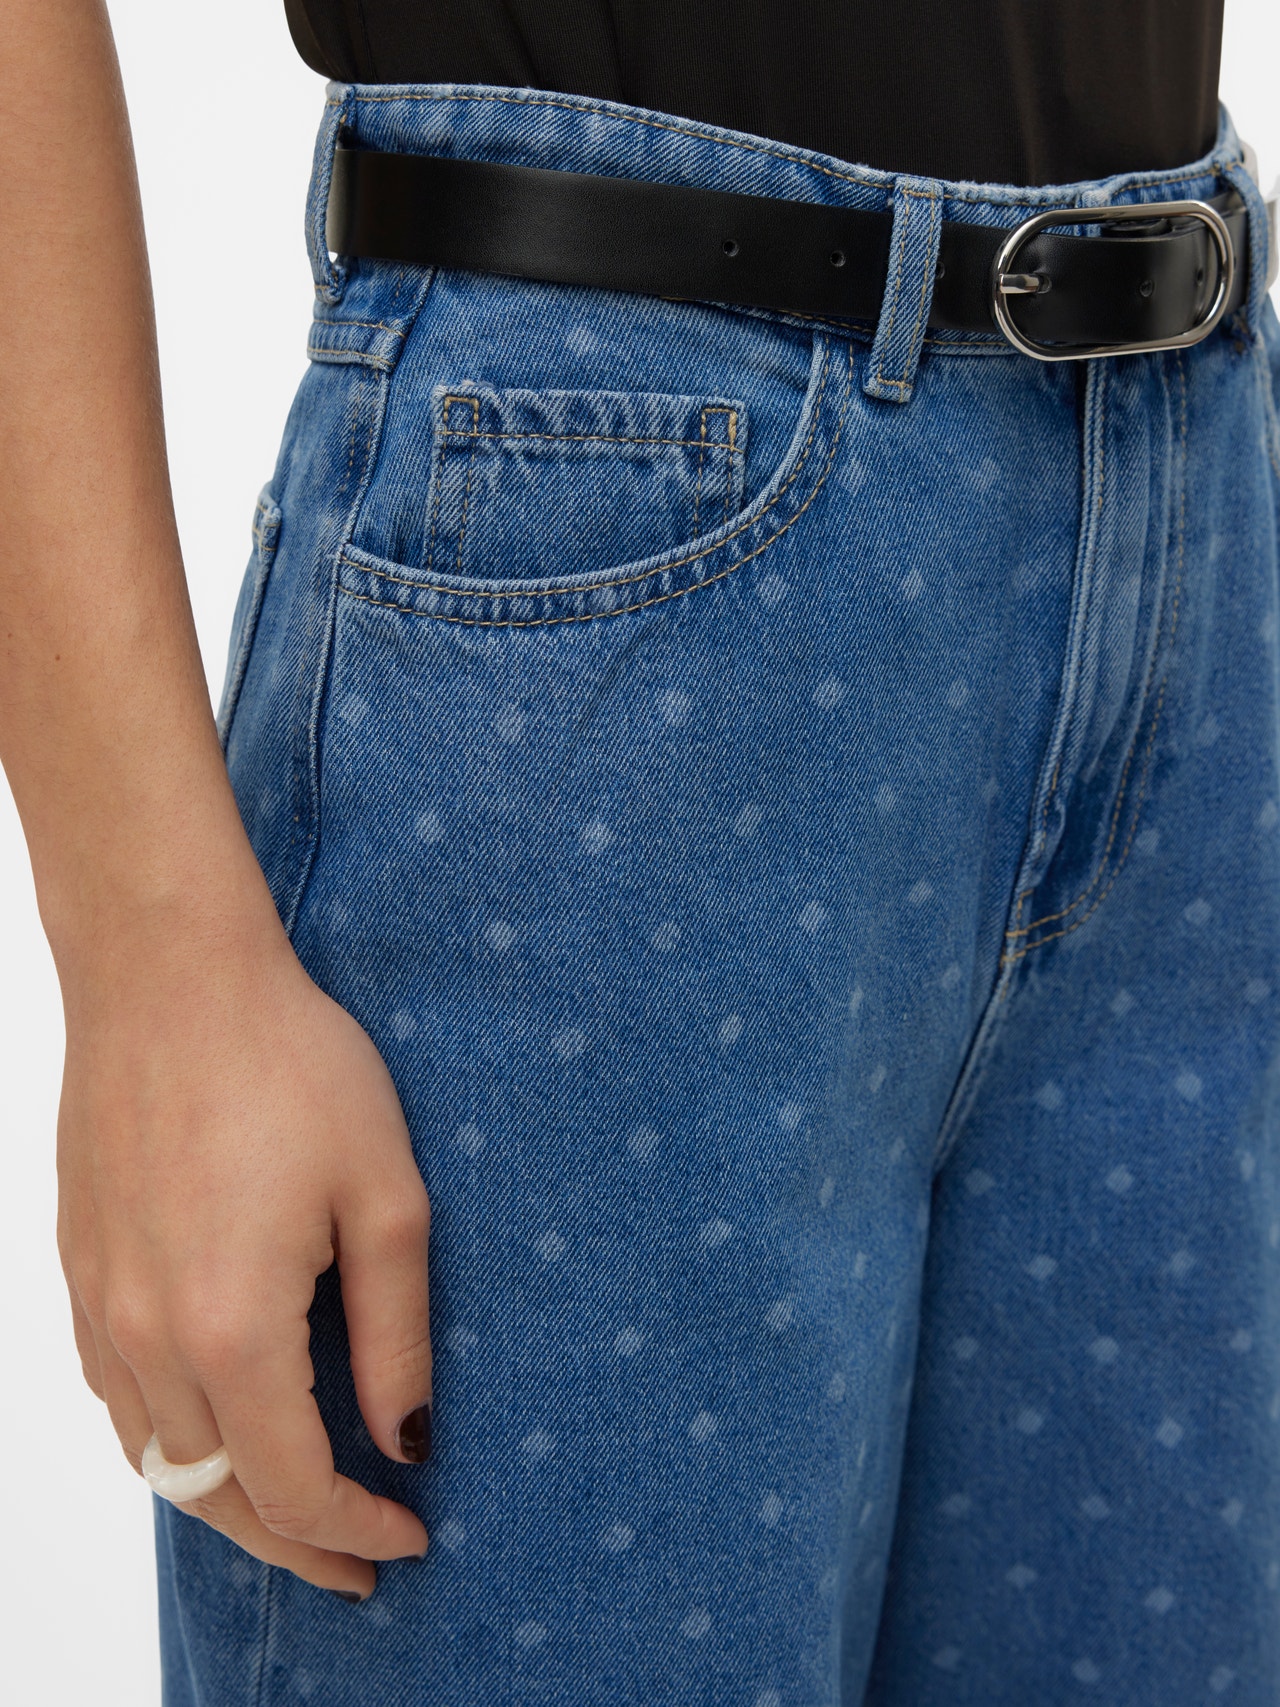 Vero Moda VMKATHY Wide Fit Jeans -Medium Blue Denim - 10308474